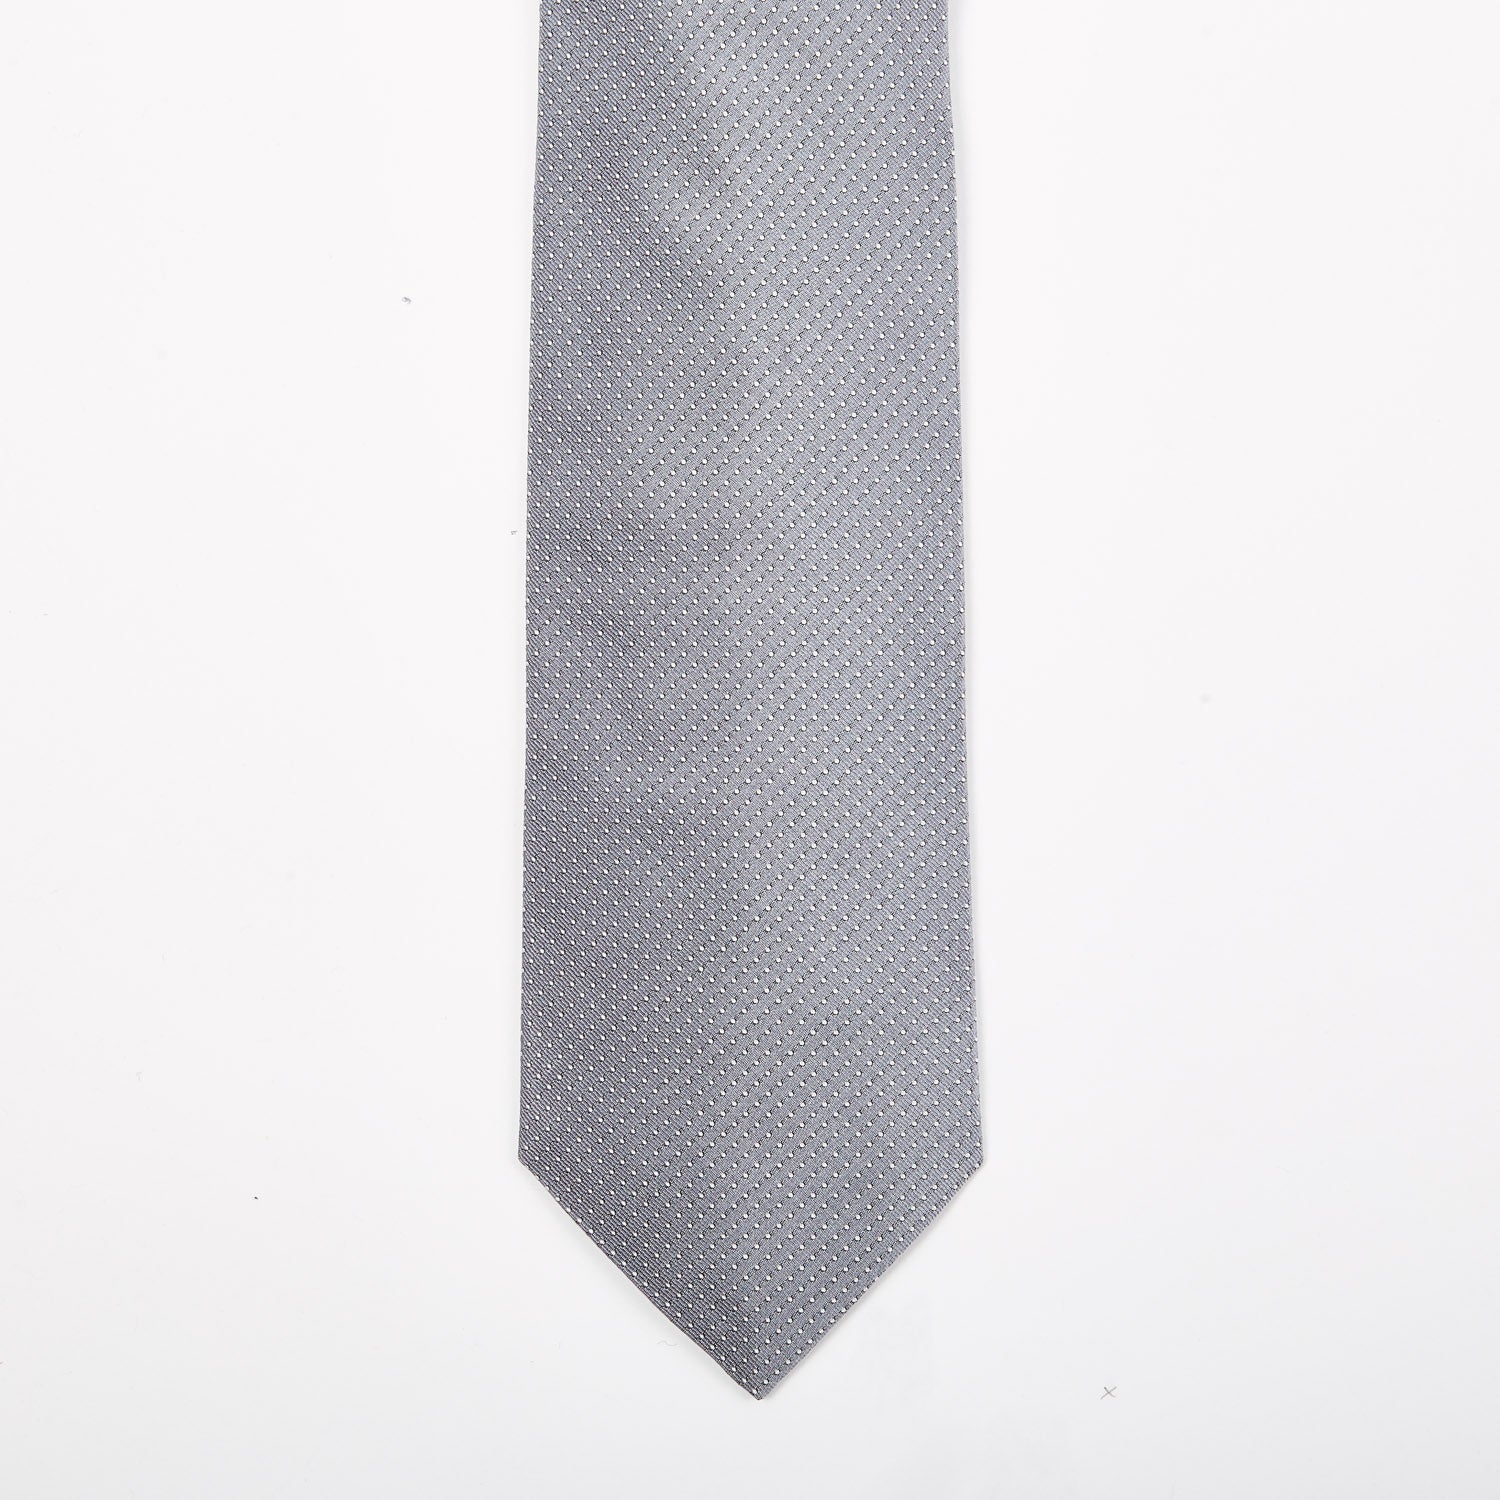 A KirbyAllison.com Sovereign Grade Silver Silk Micro Dot Tie on a white background.